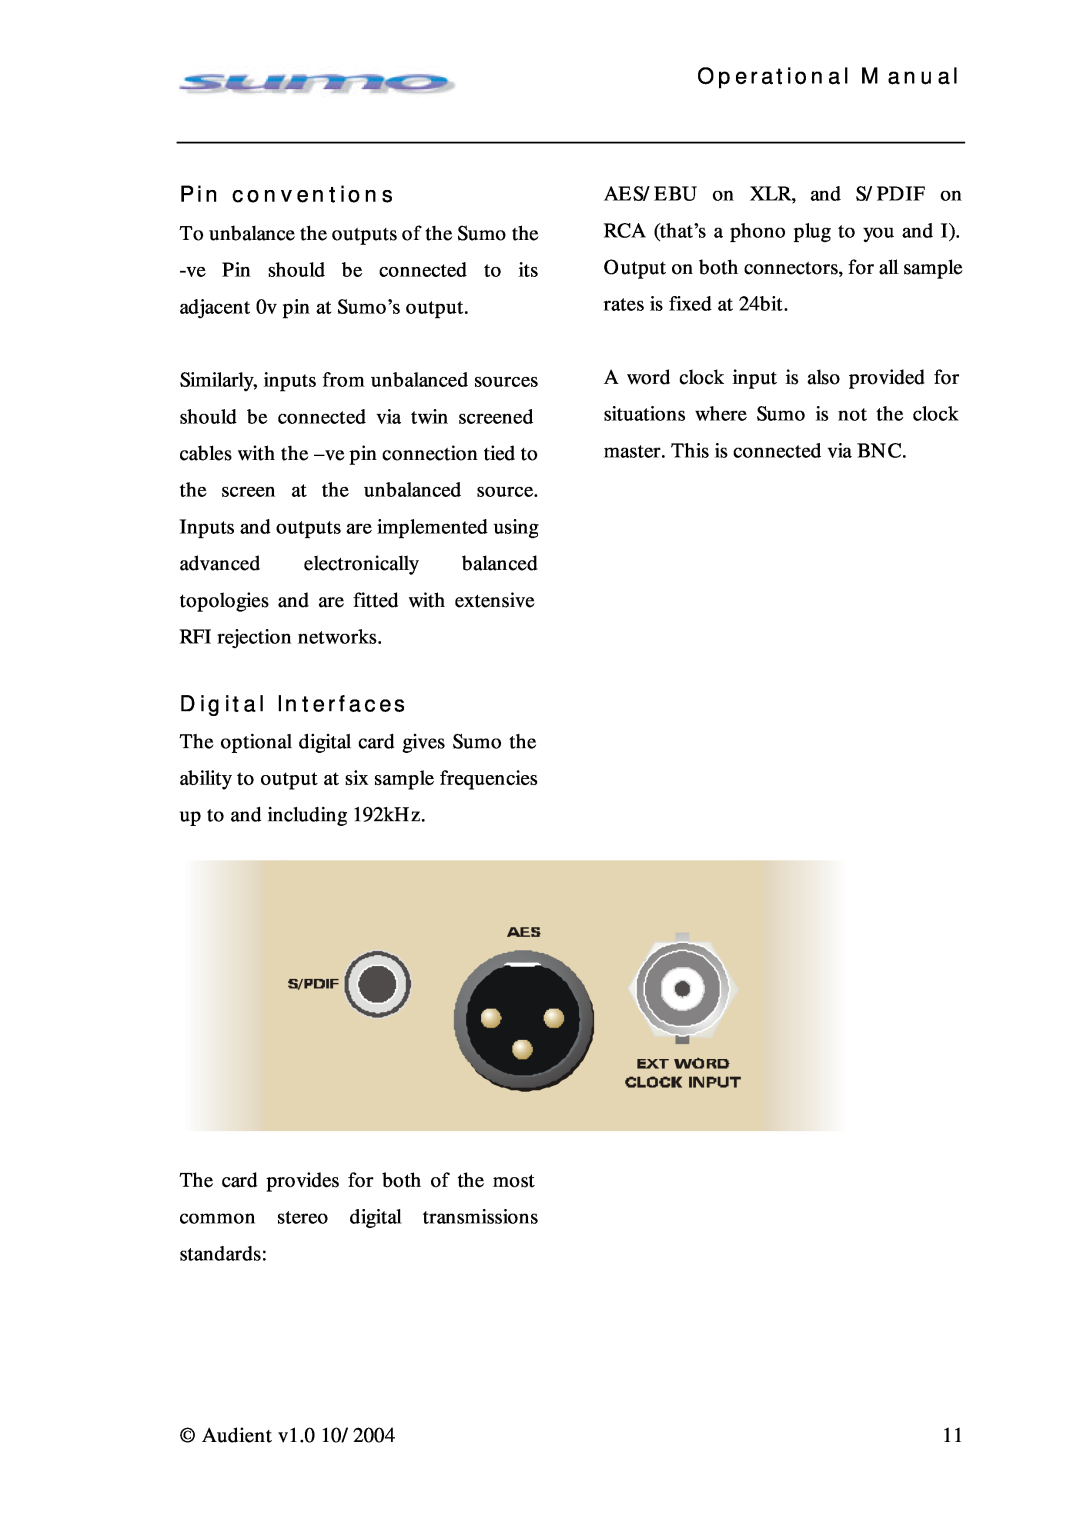 Sumo Summing Amplifier manual Operational Manual, Pin conventions, Digital Interfaces 